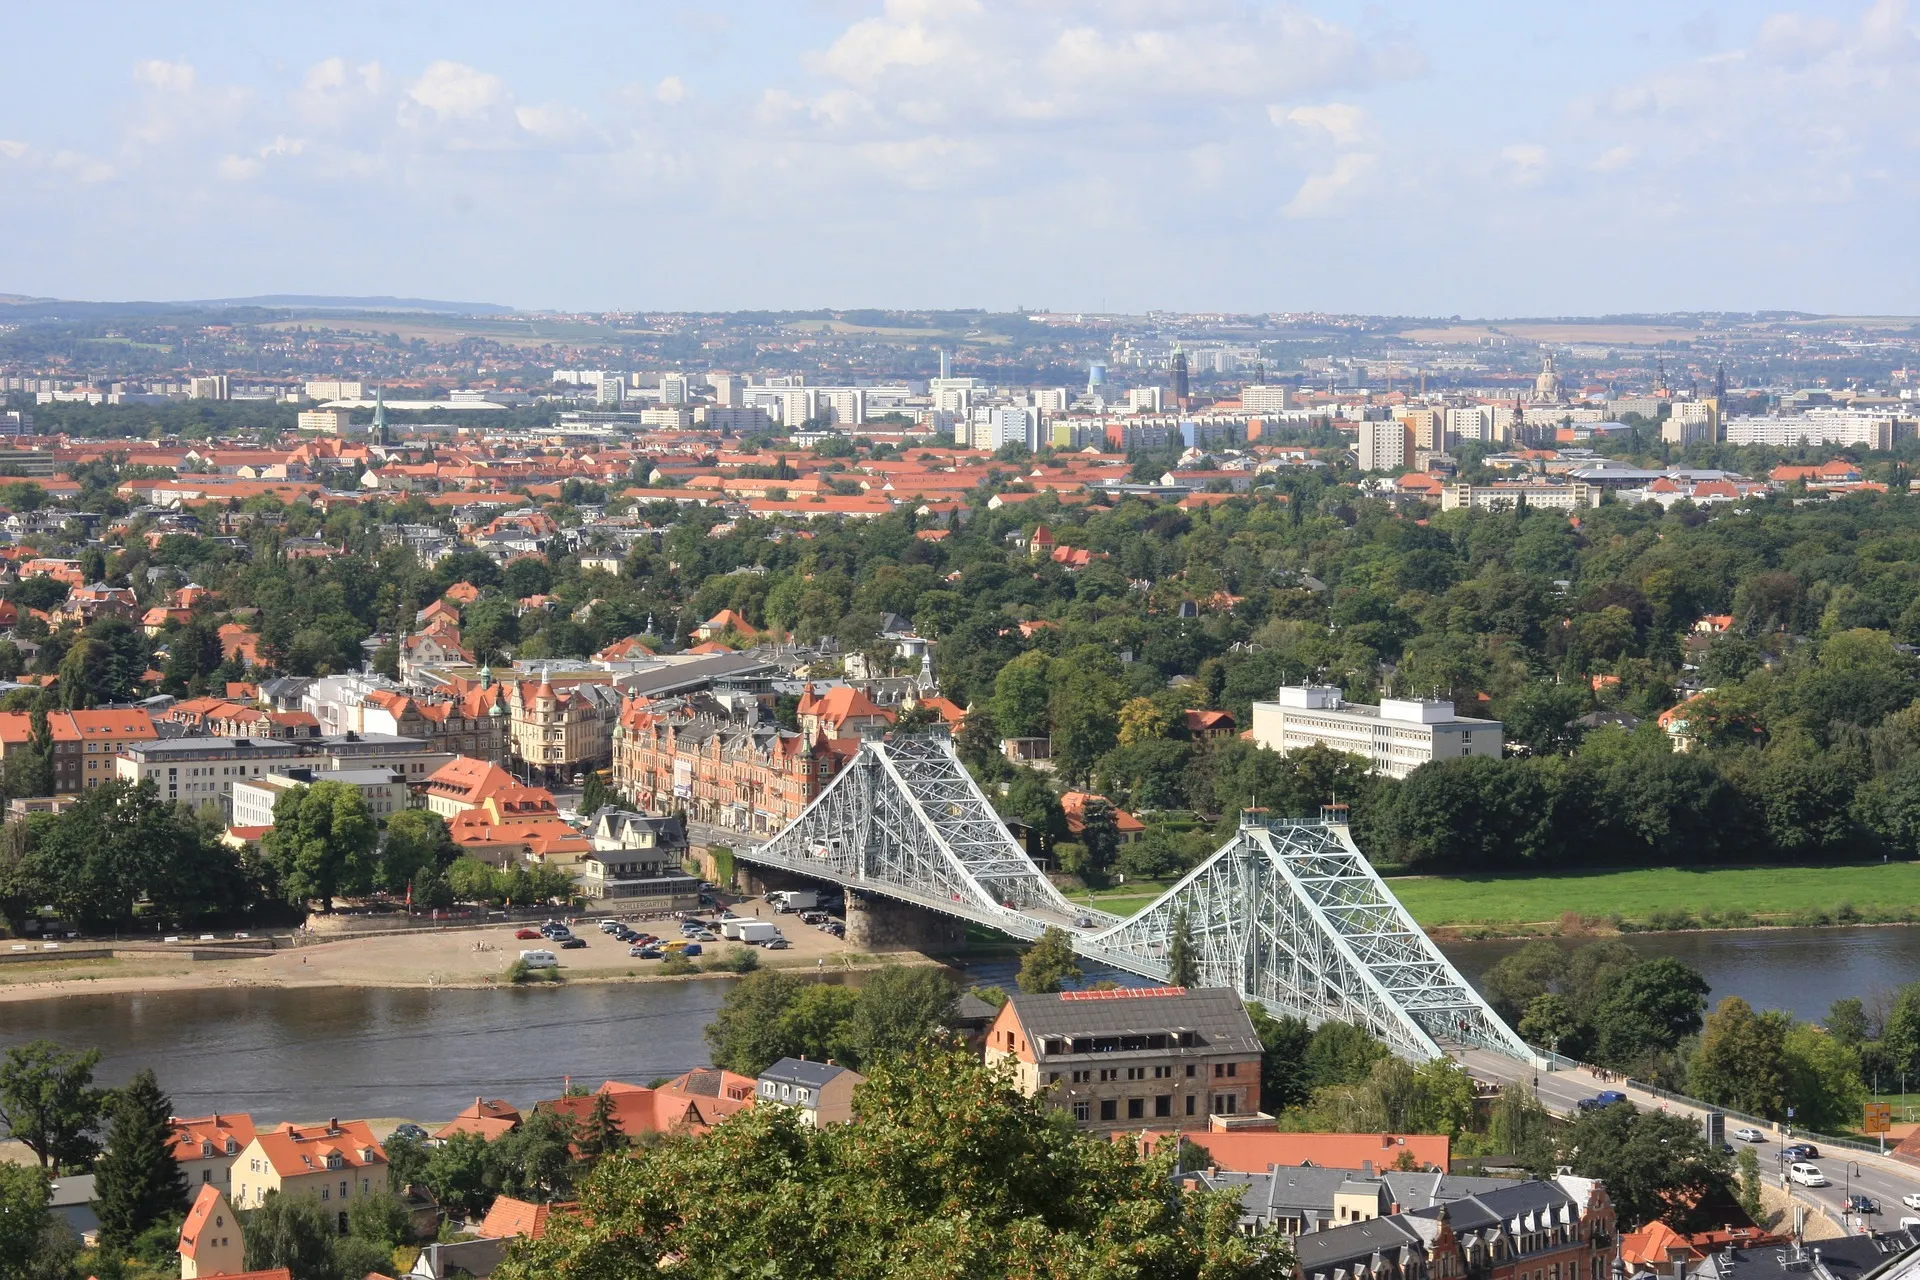 View towards Dresden’s city center from Dresden’s Loschwitz district, with the “Blaues Wunder” (“Blue Wonder”) bridge.